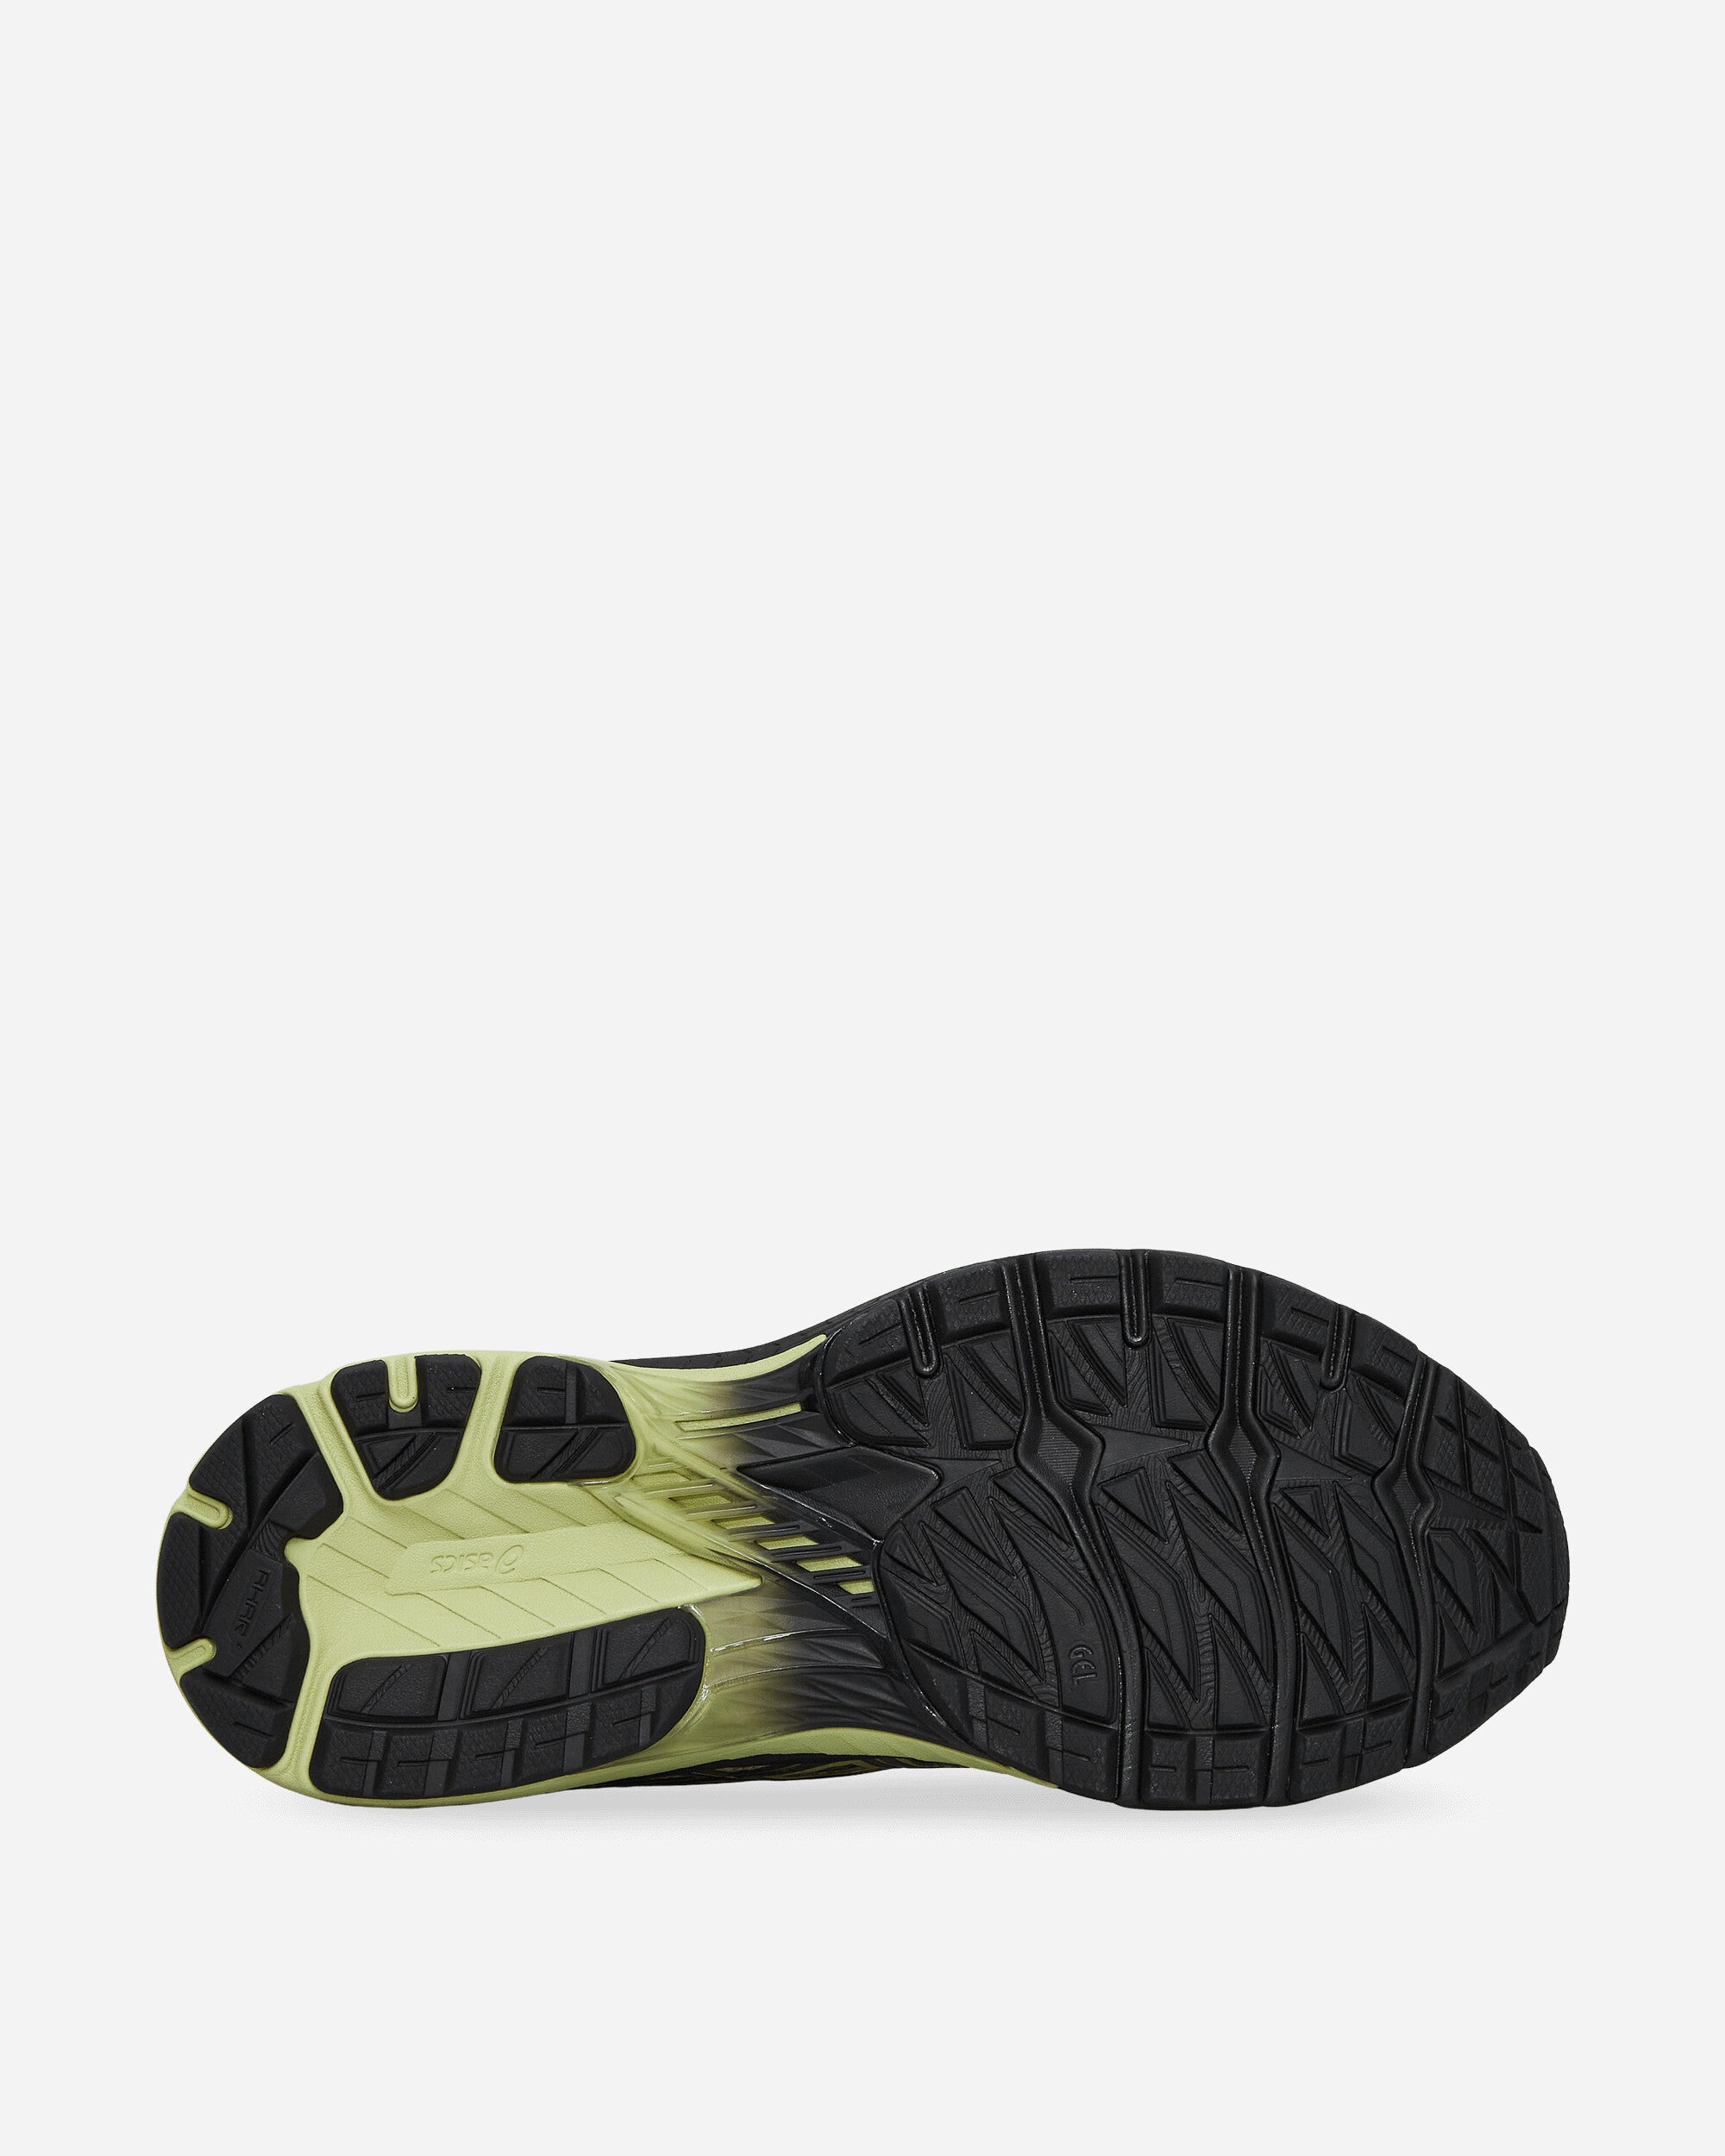 Asics Us4-S Gel-Terrain Black/Neon Lime Sneakers Low 1203A394-001